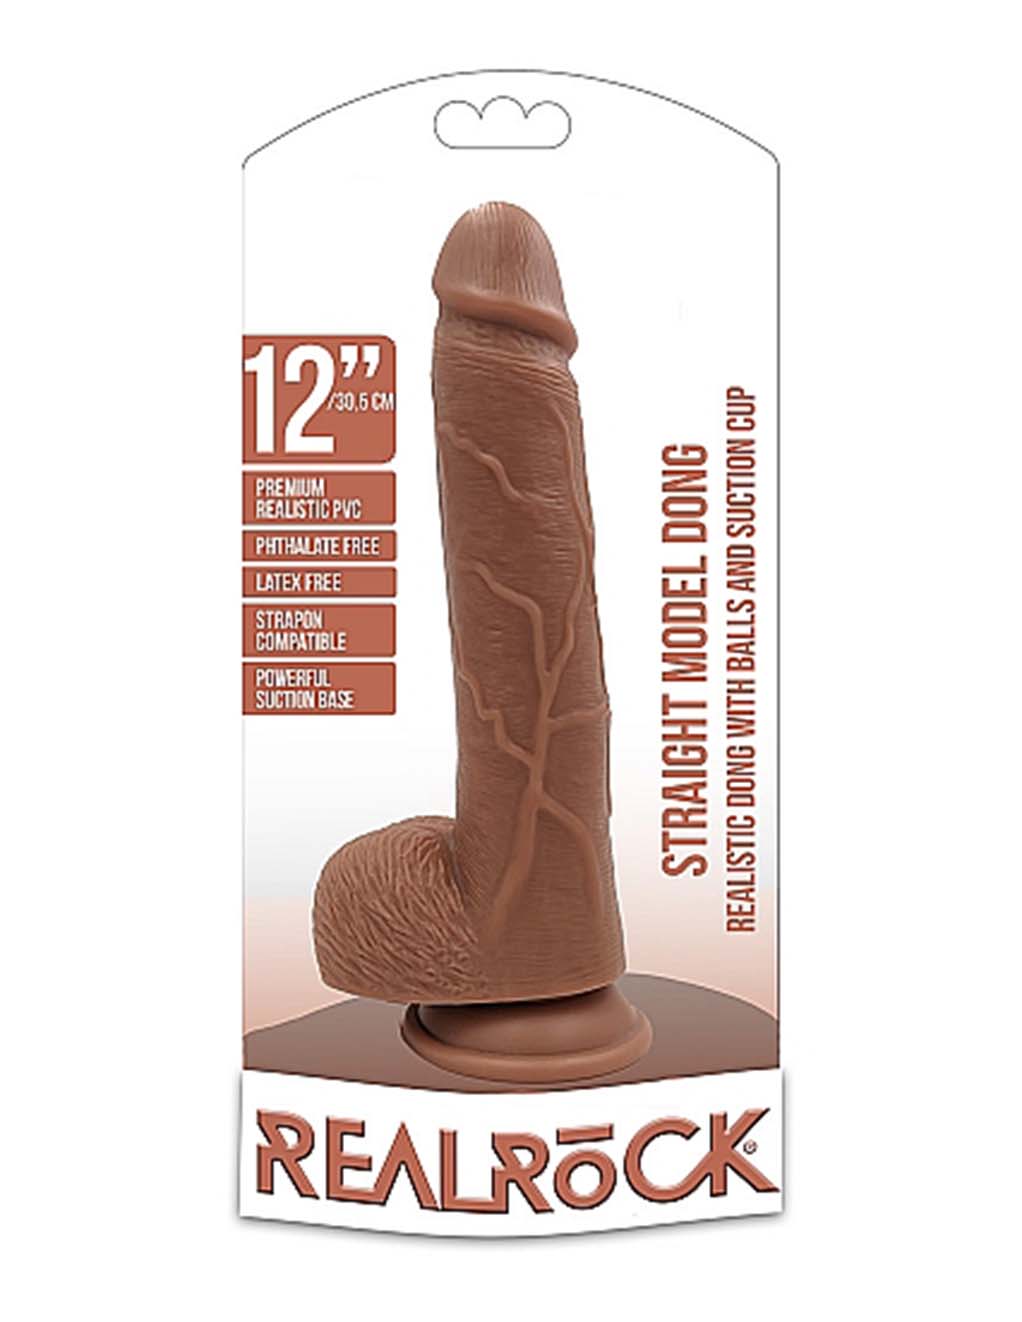 Real Rock Realistic 12" Dong with Balls- Caramel- box